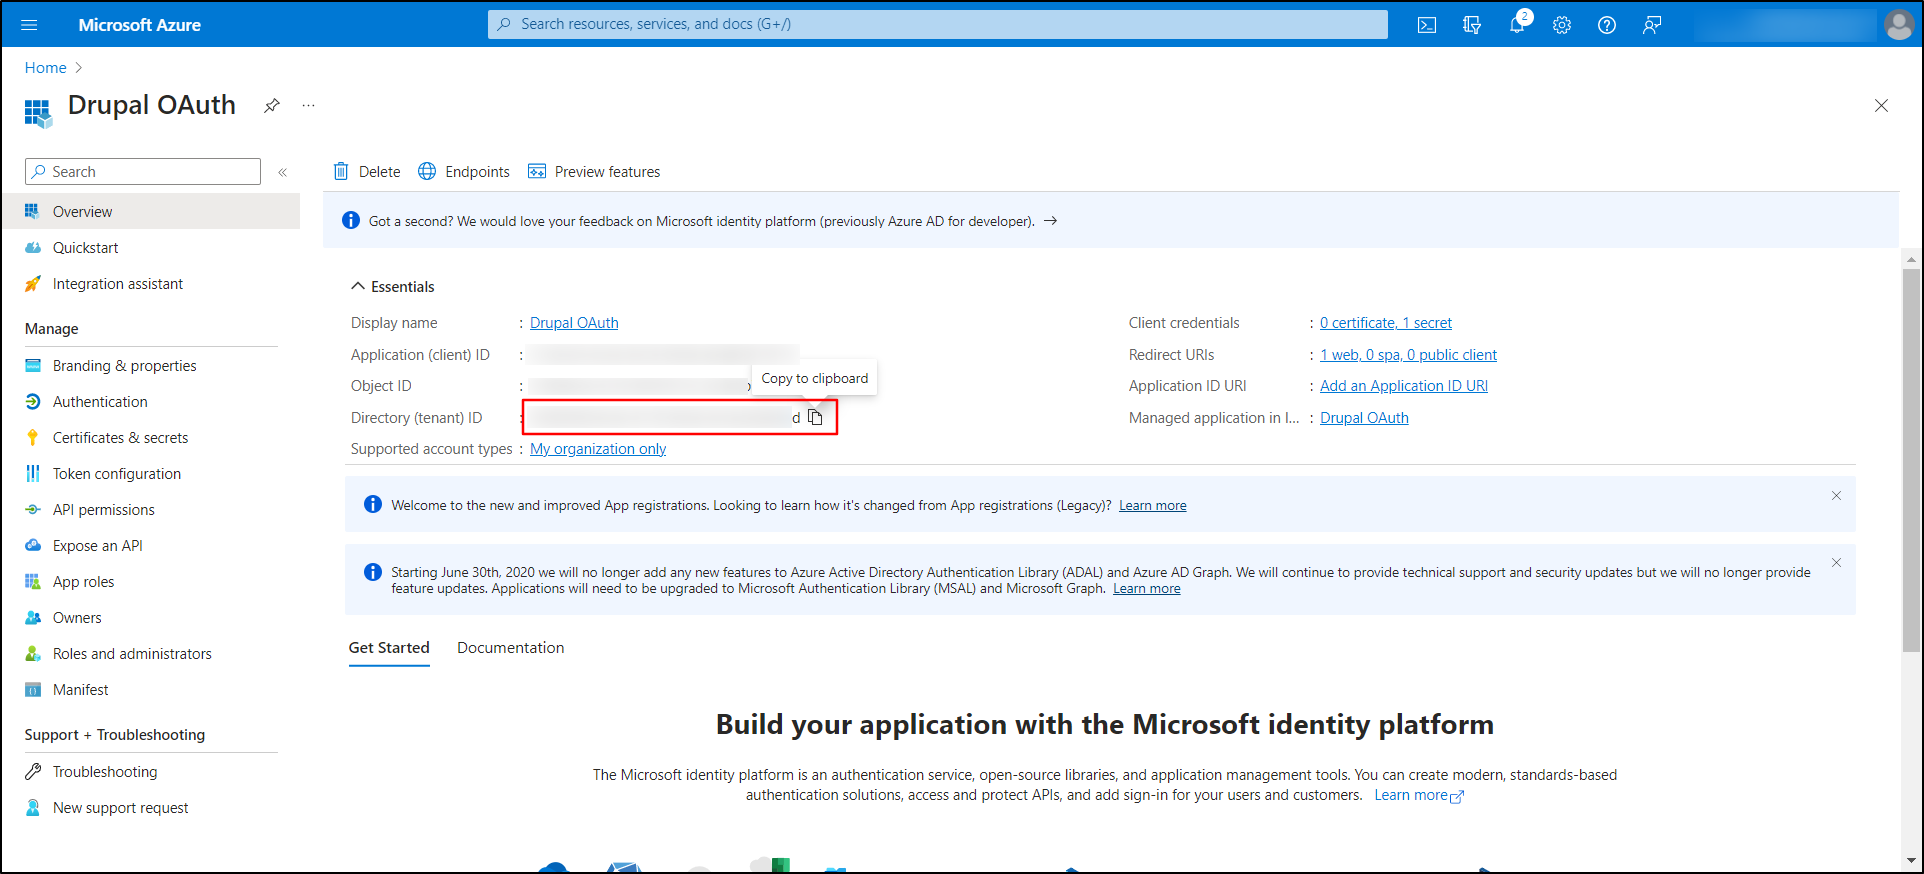 Microsoft Azure Portal - Copy the Directory (tenant) ID